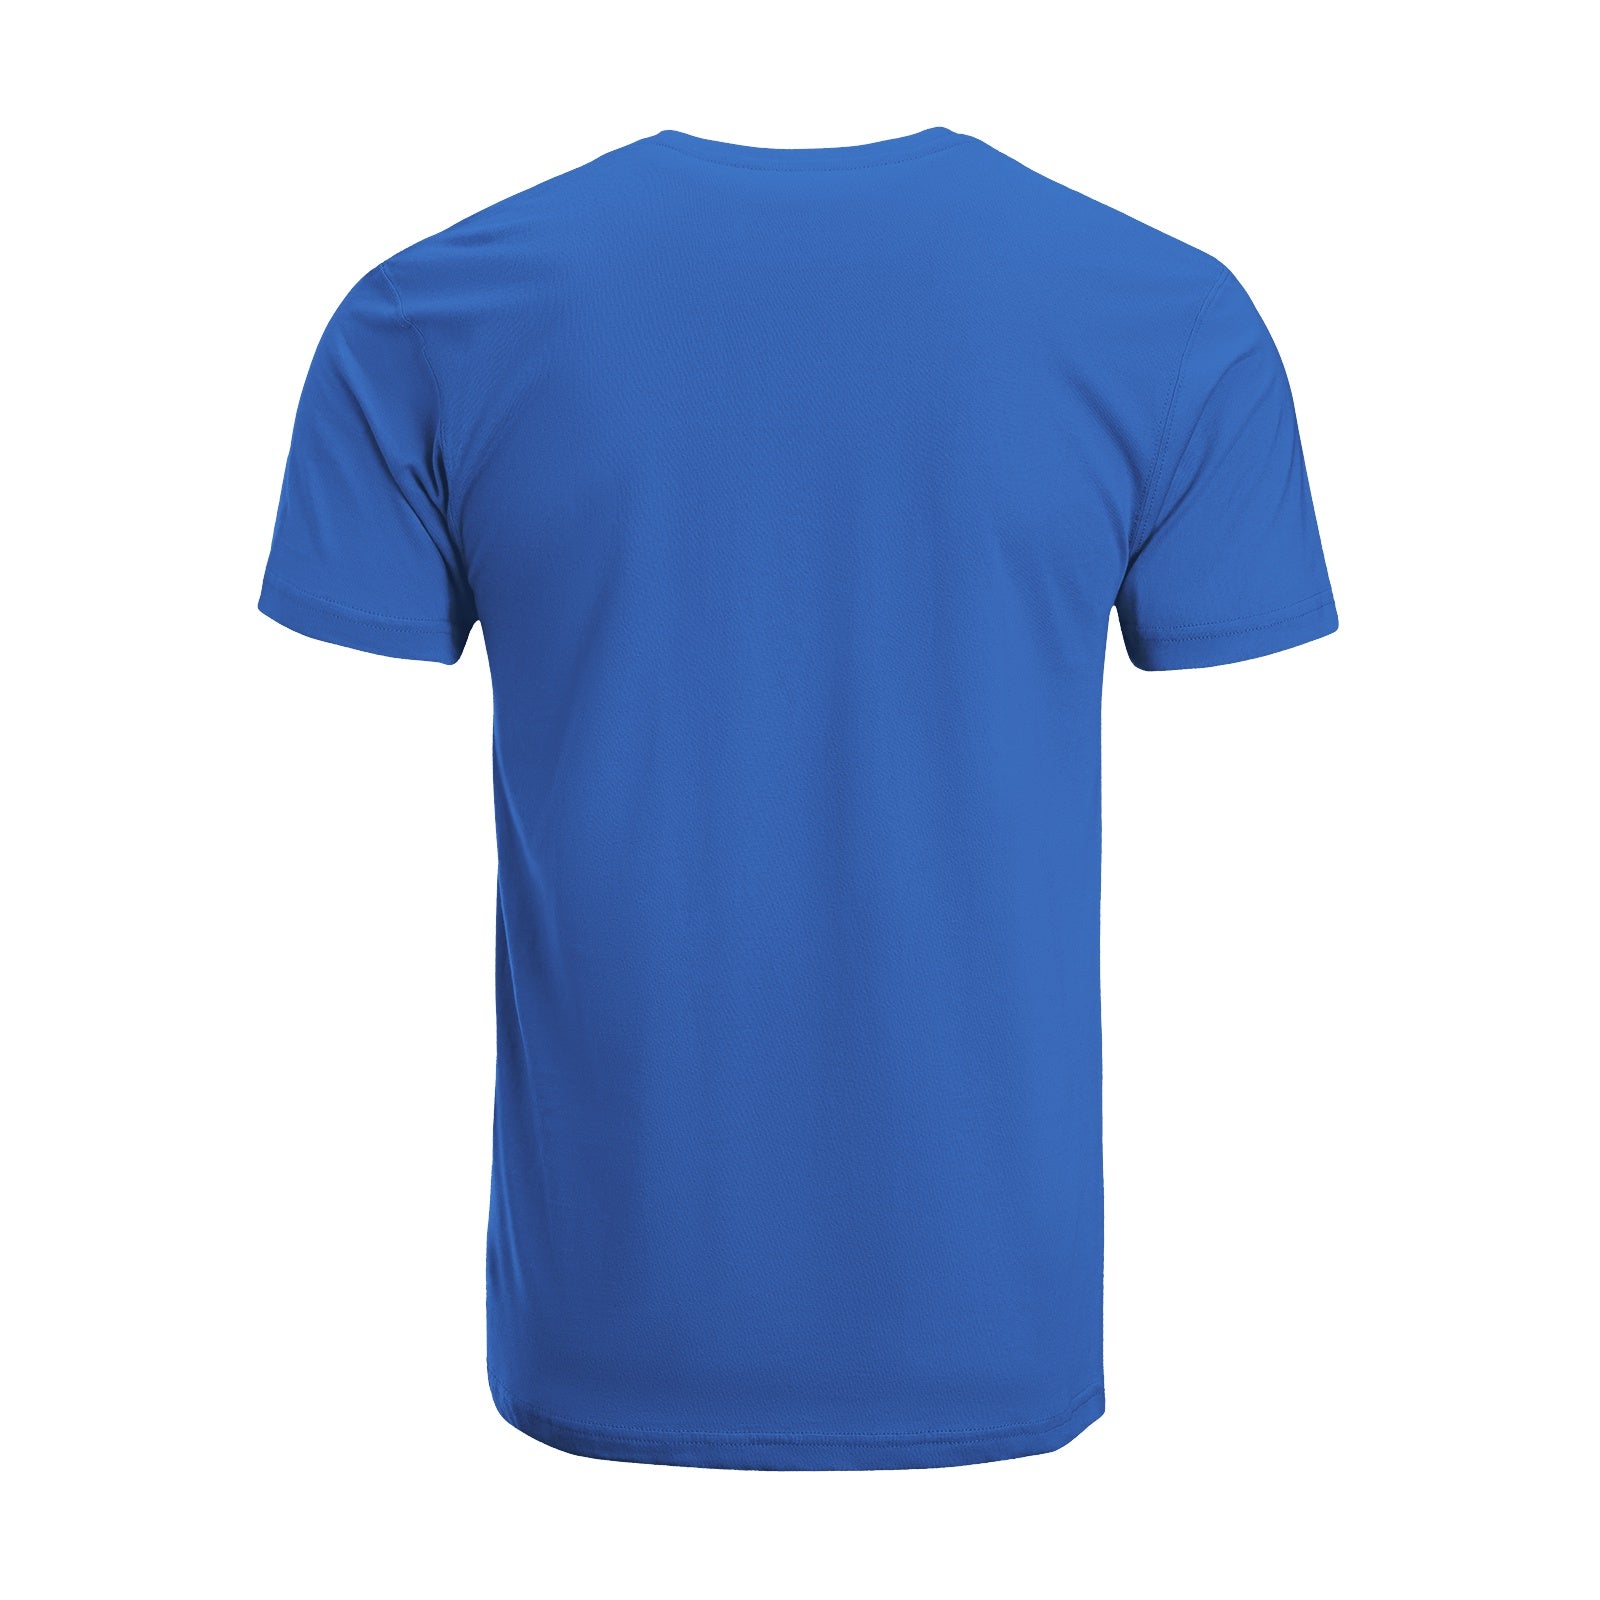 Unisex Short Sleeve Crew Neck Cotton Jersey T-Shirt CAT 25 - Tara-Outfits.com